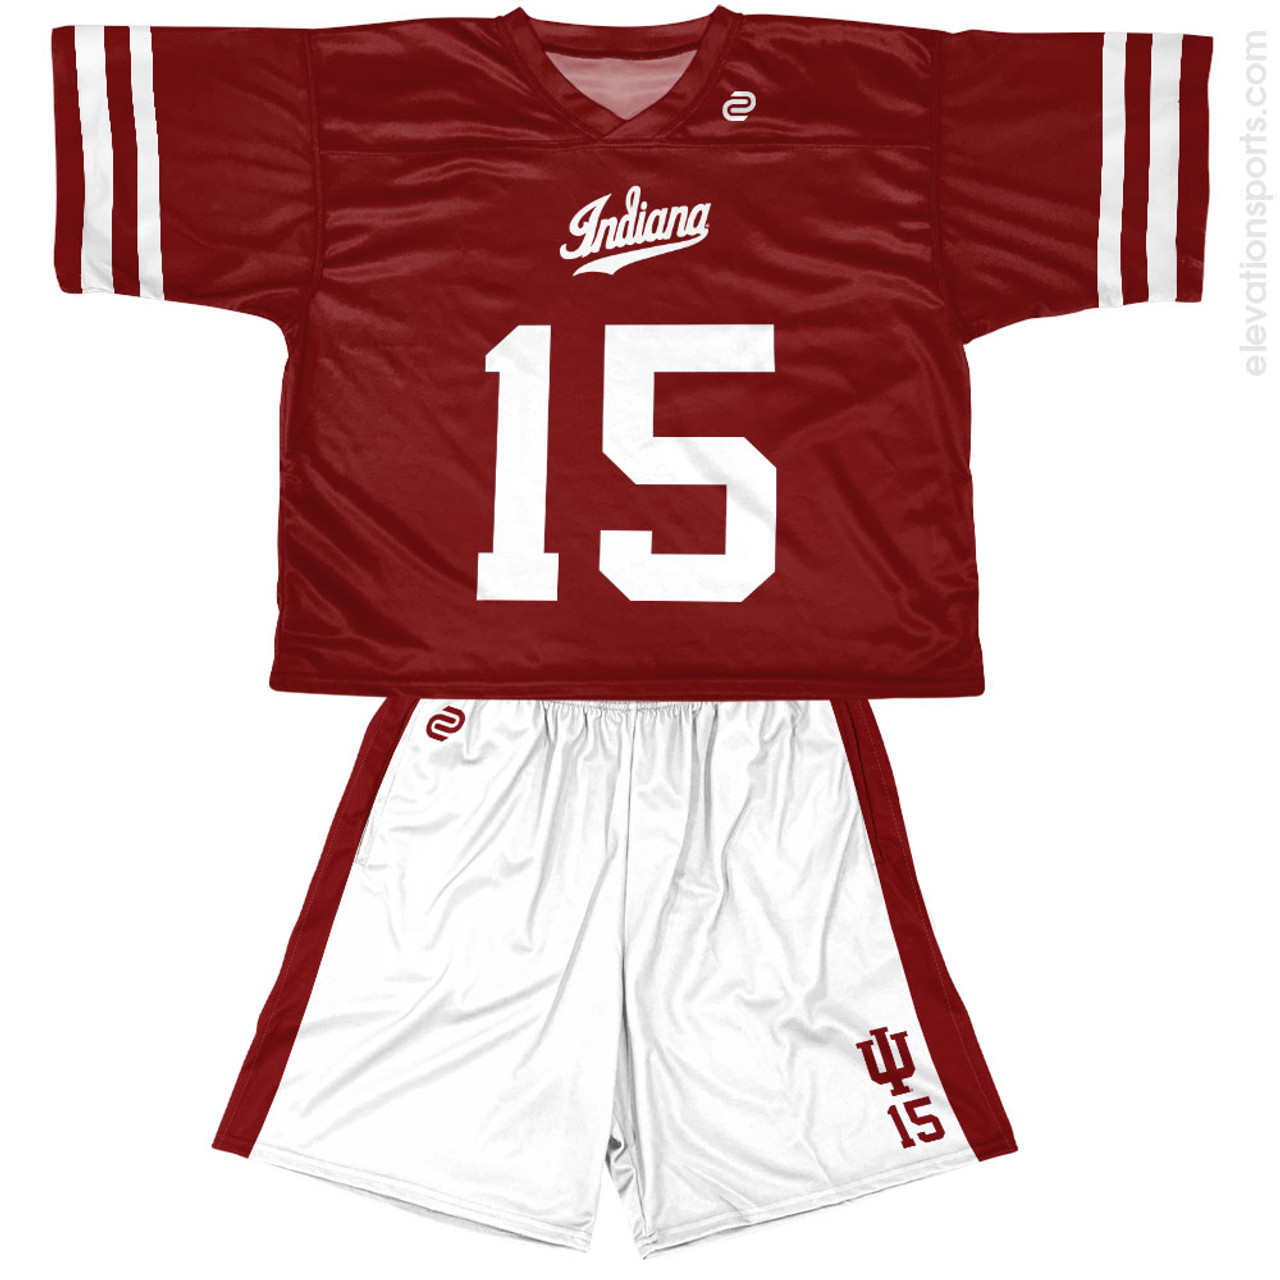 Yeti Sleeve Performance Shirt, box lacrosse uniforms